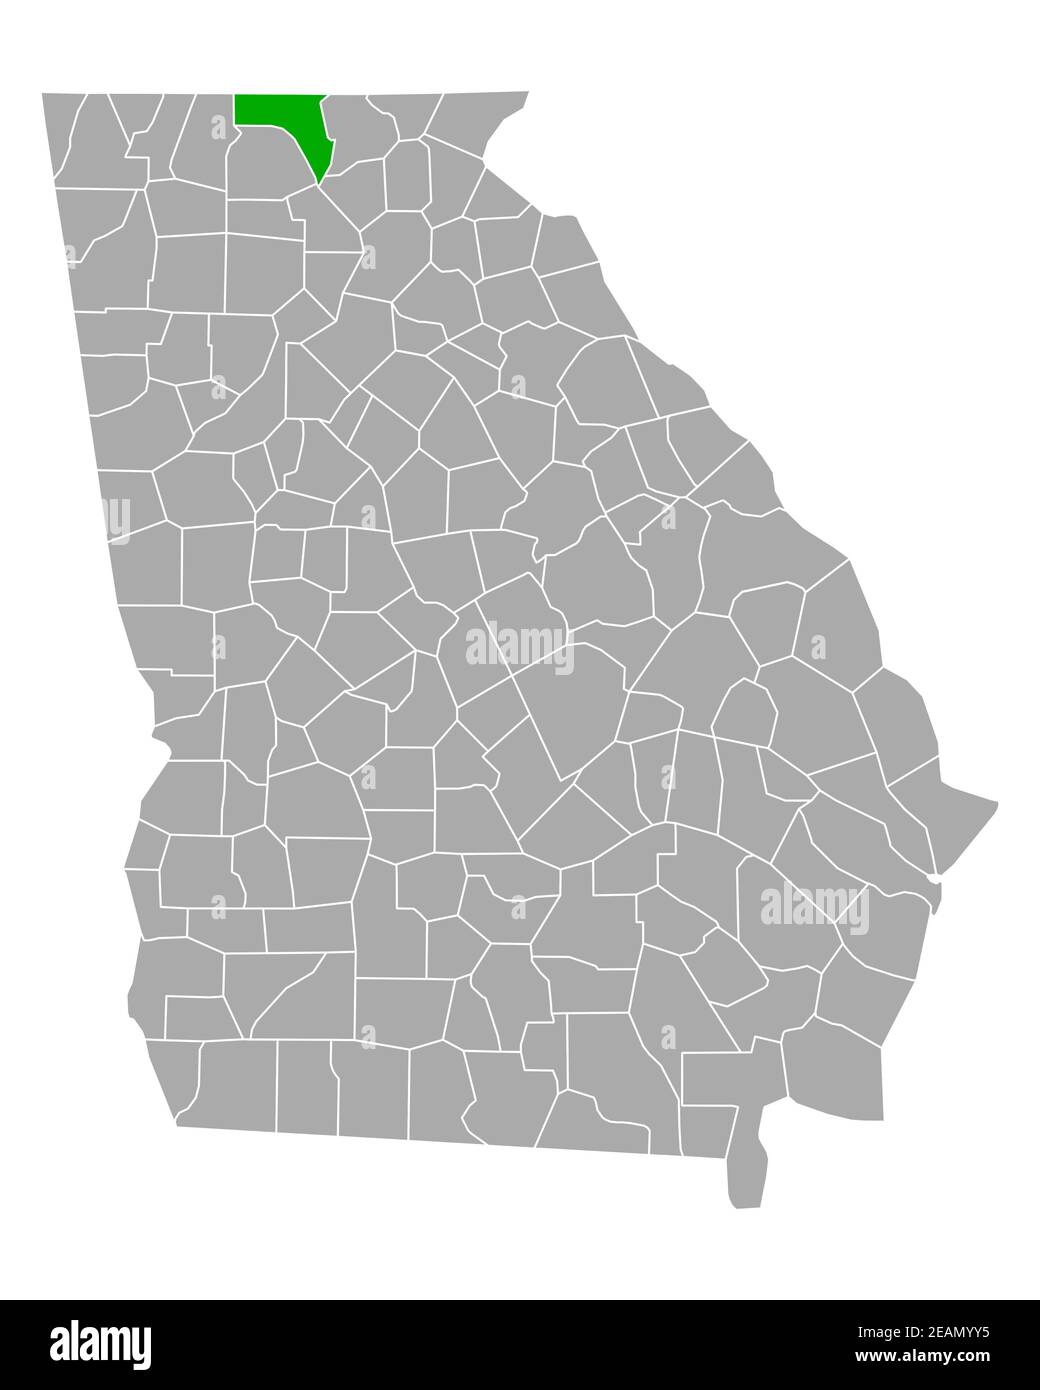 Map of Fannin in Georgia Stock Photo